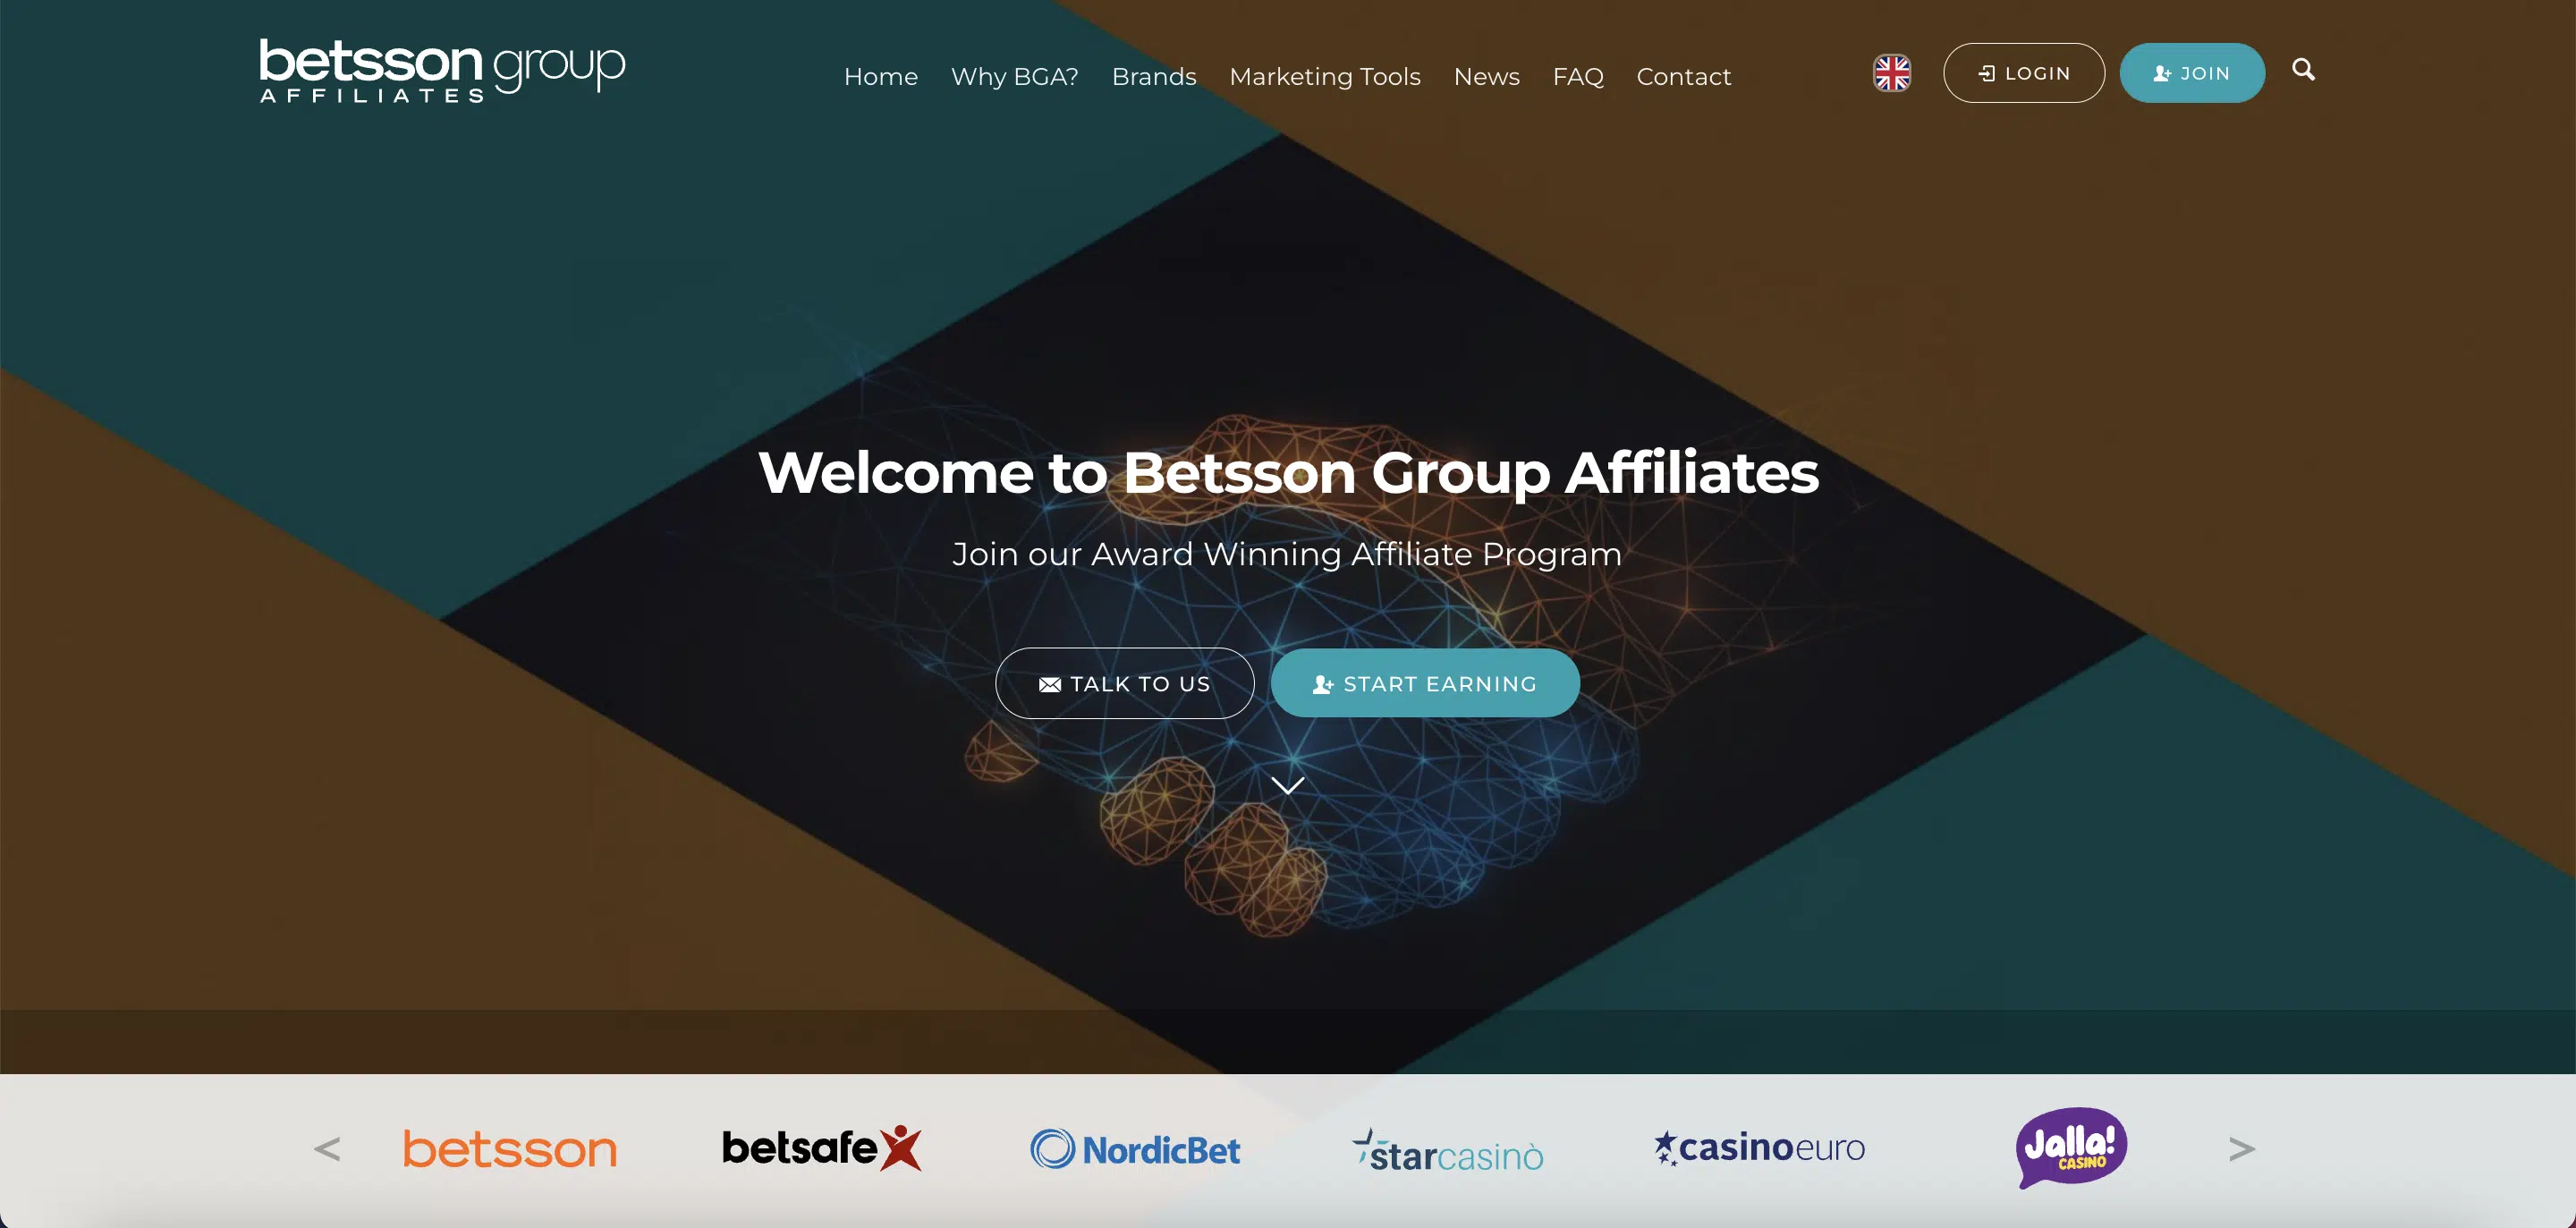 betsson group affiliates website